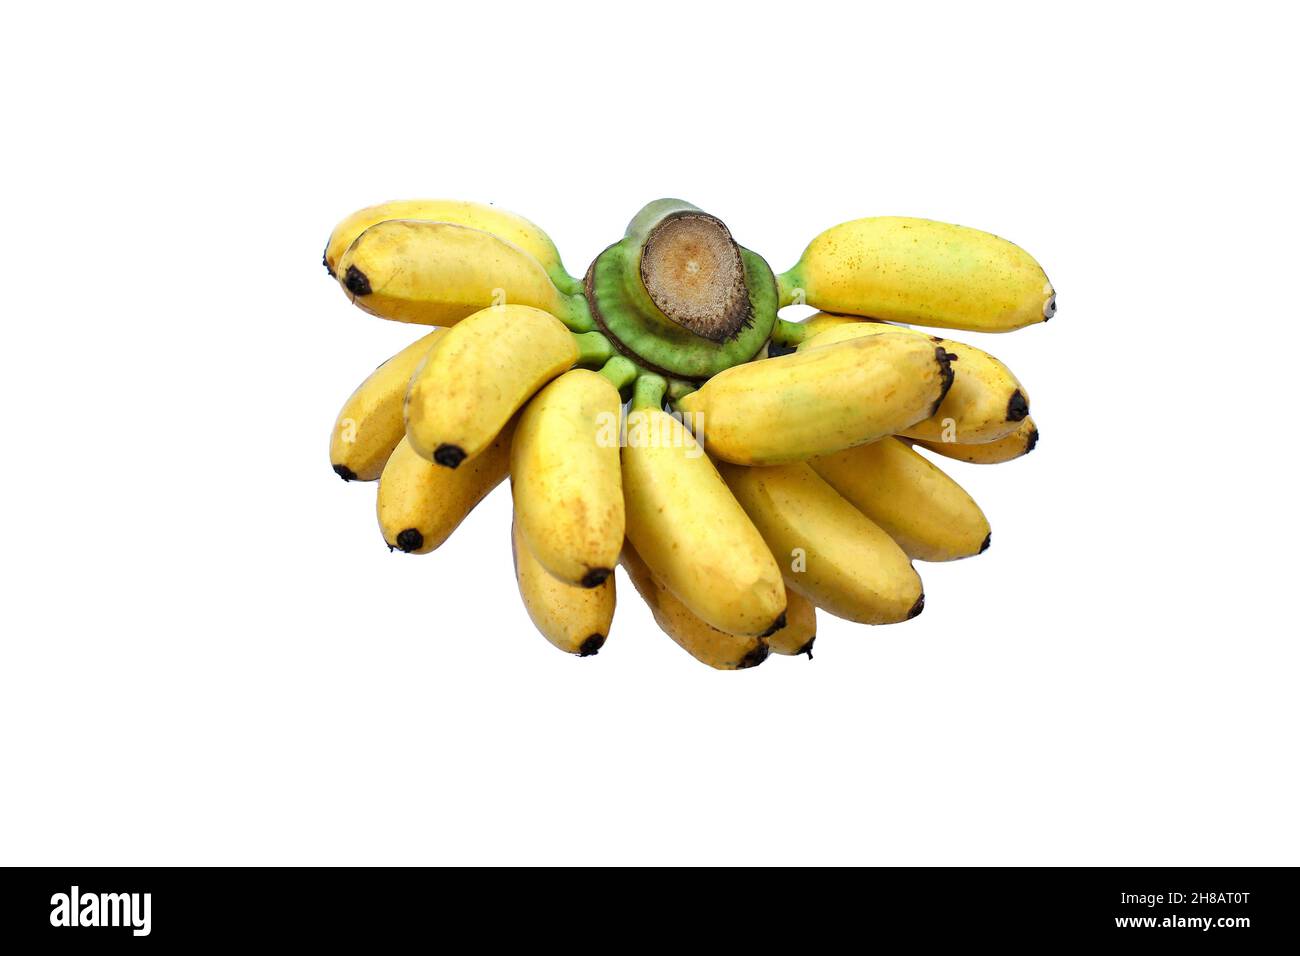 bananas on a white background Bananas contain vitamins that balance the body. Stock Photo